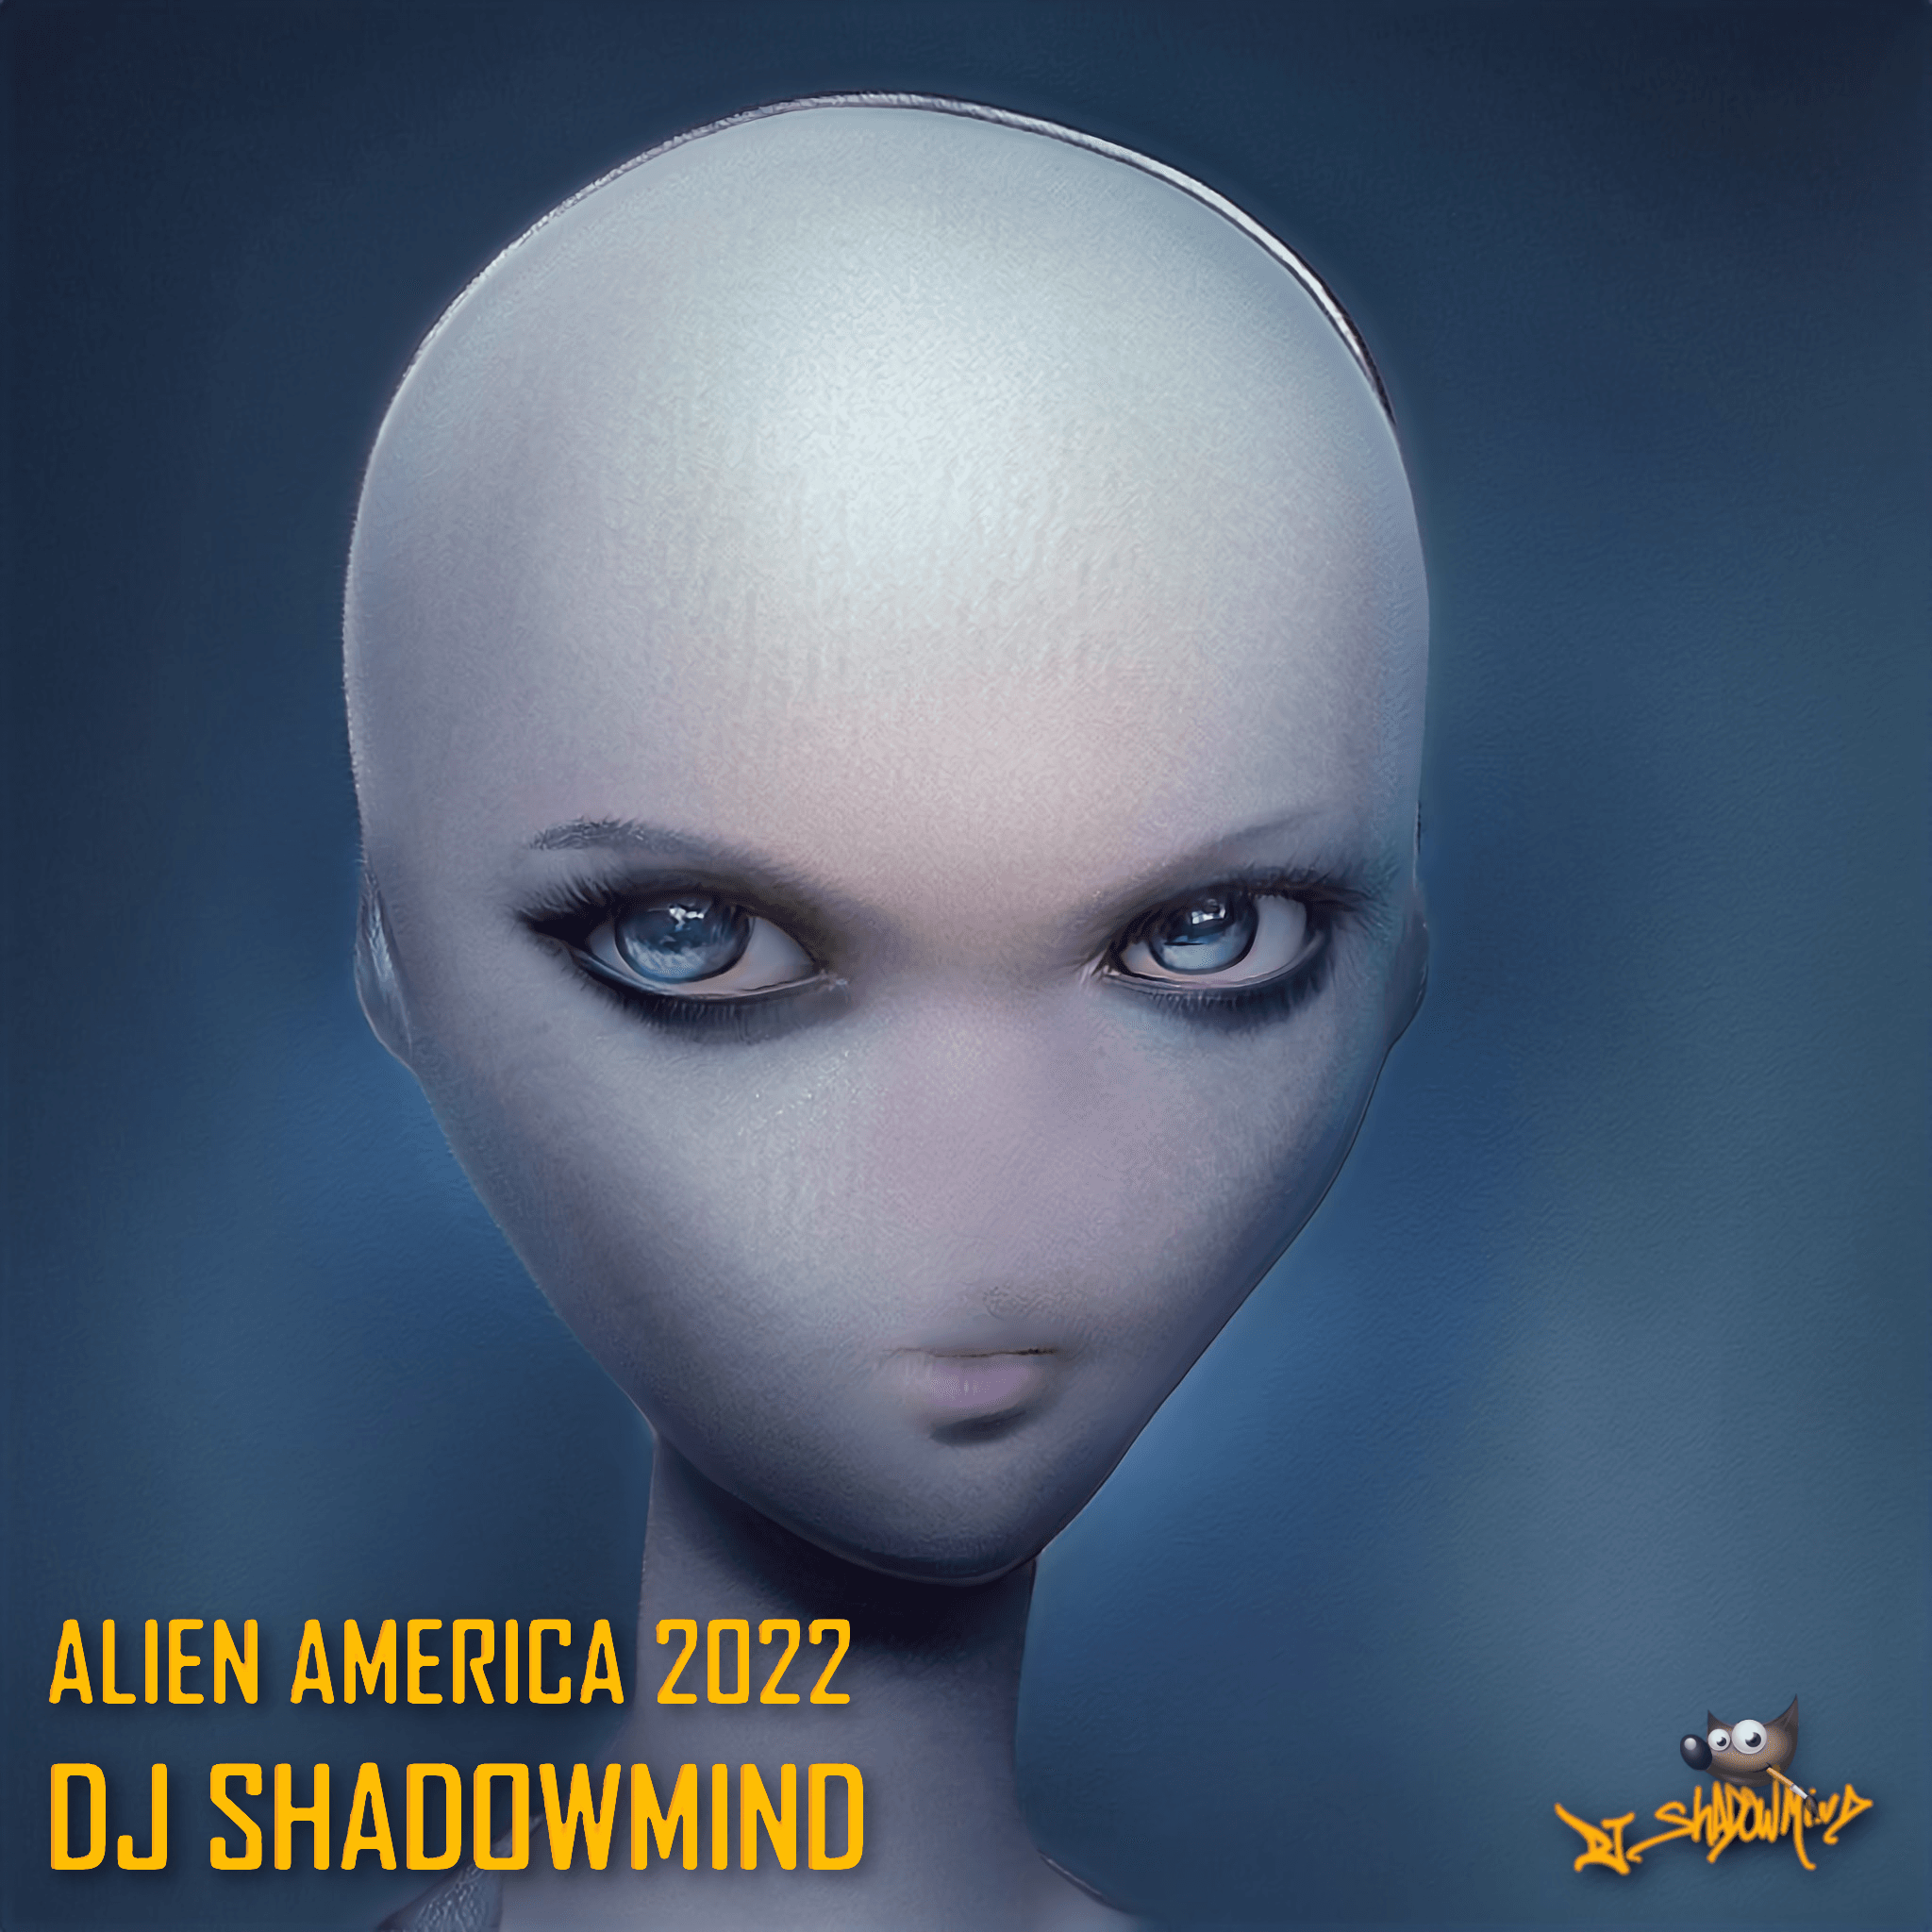 Alien America 2022 - Agent 012